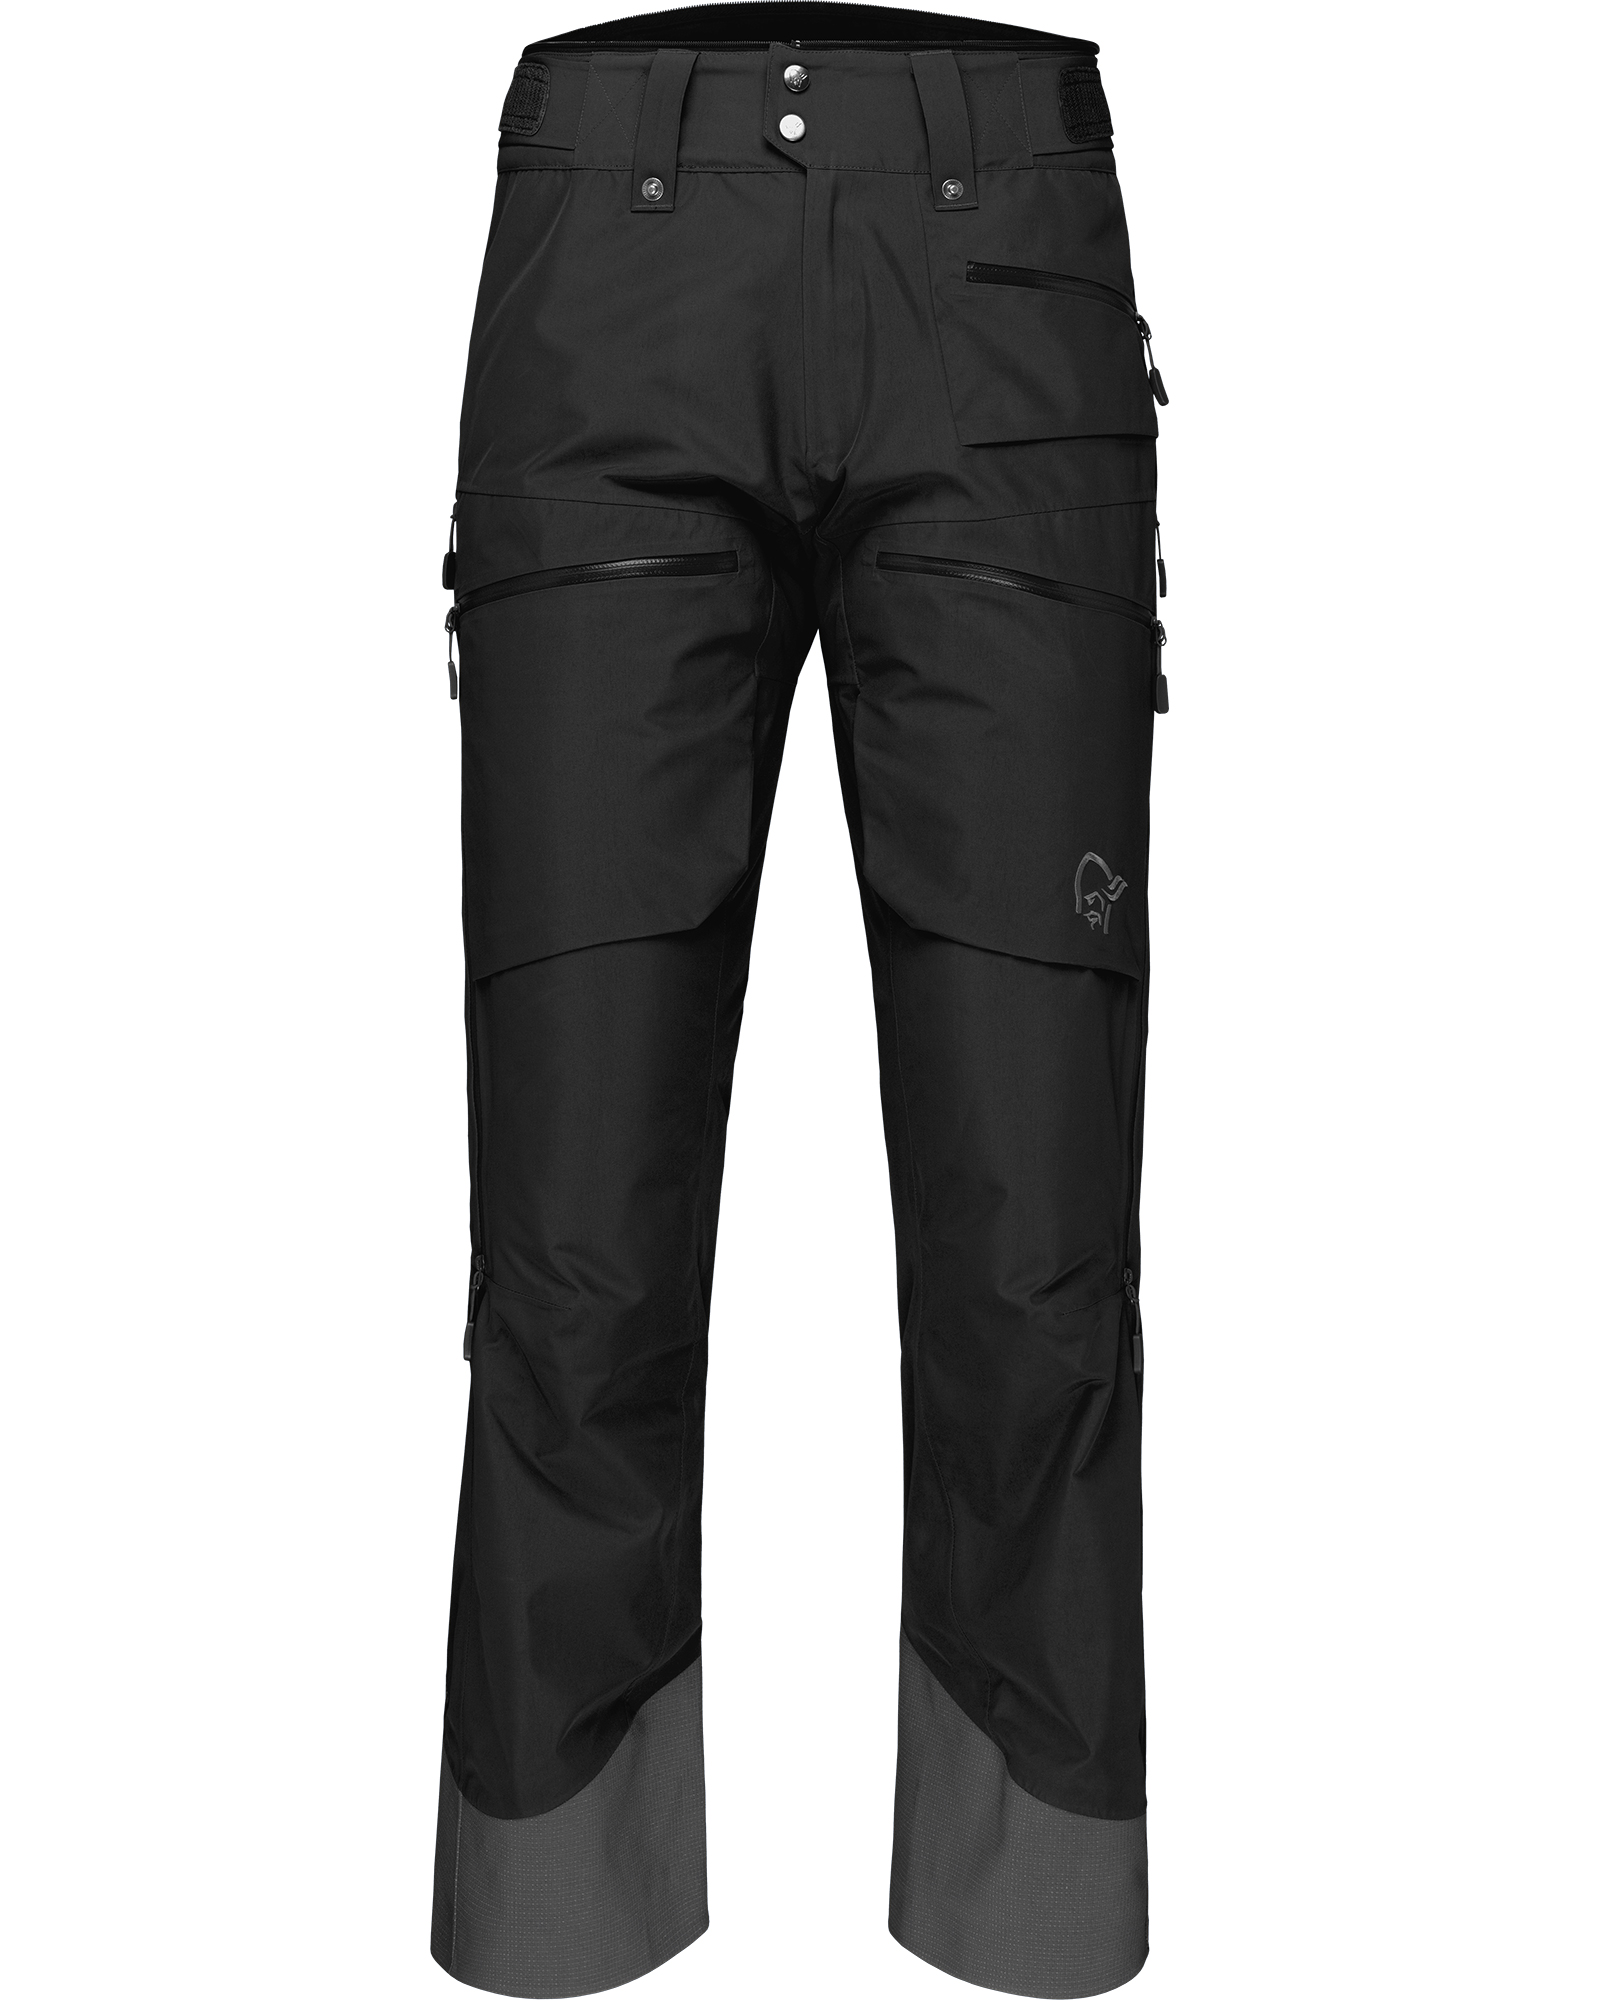 Norrona Men's Lofoten GORE-TEX Insulated Pants